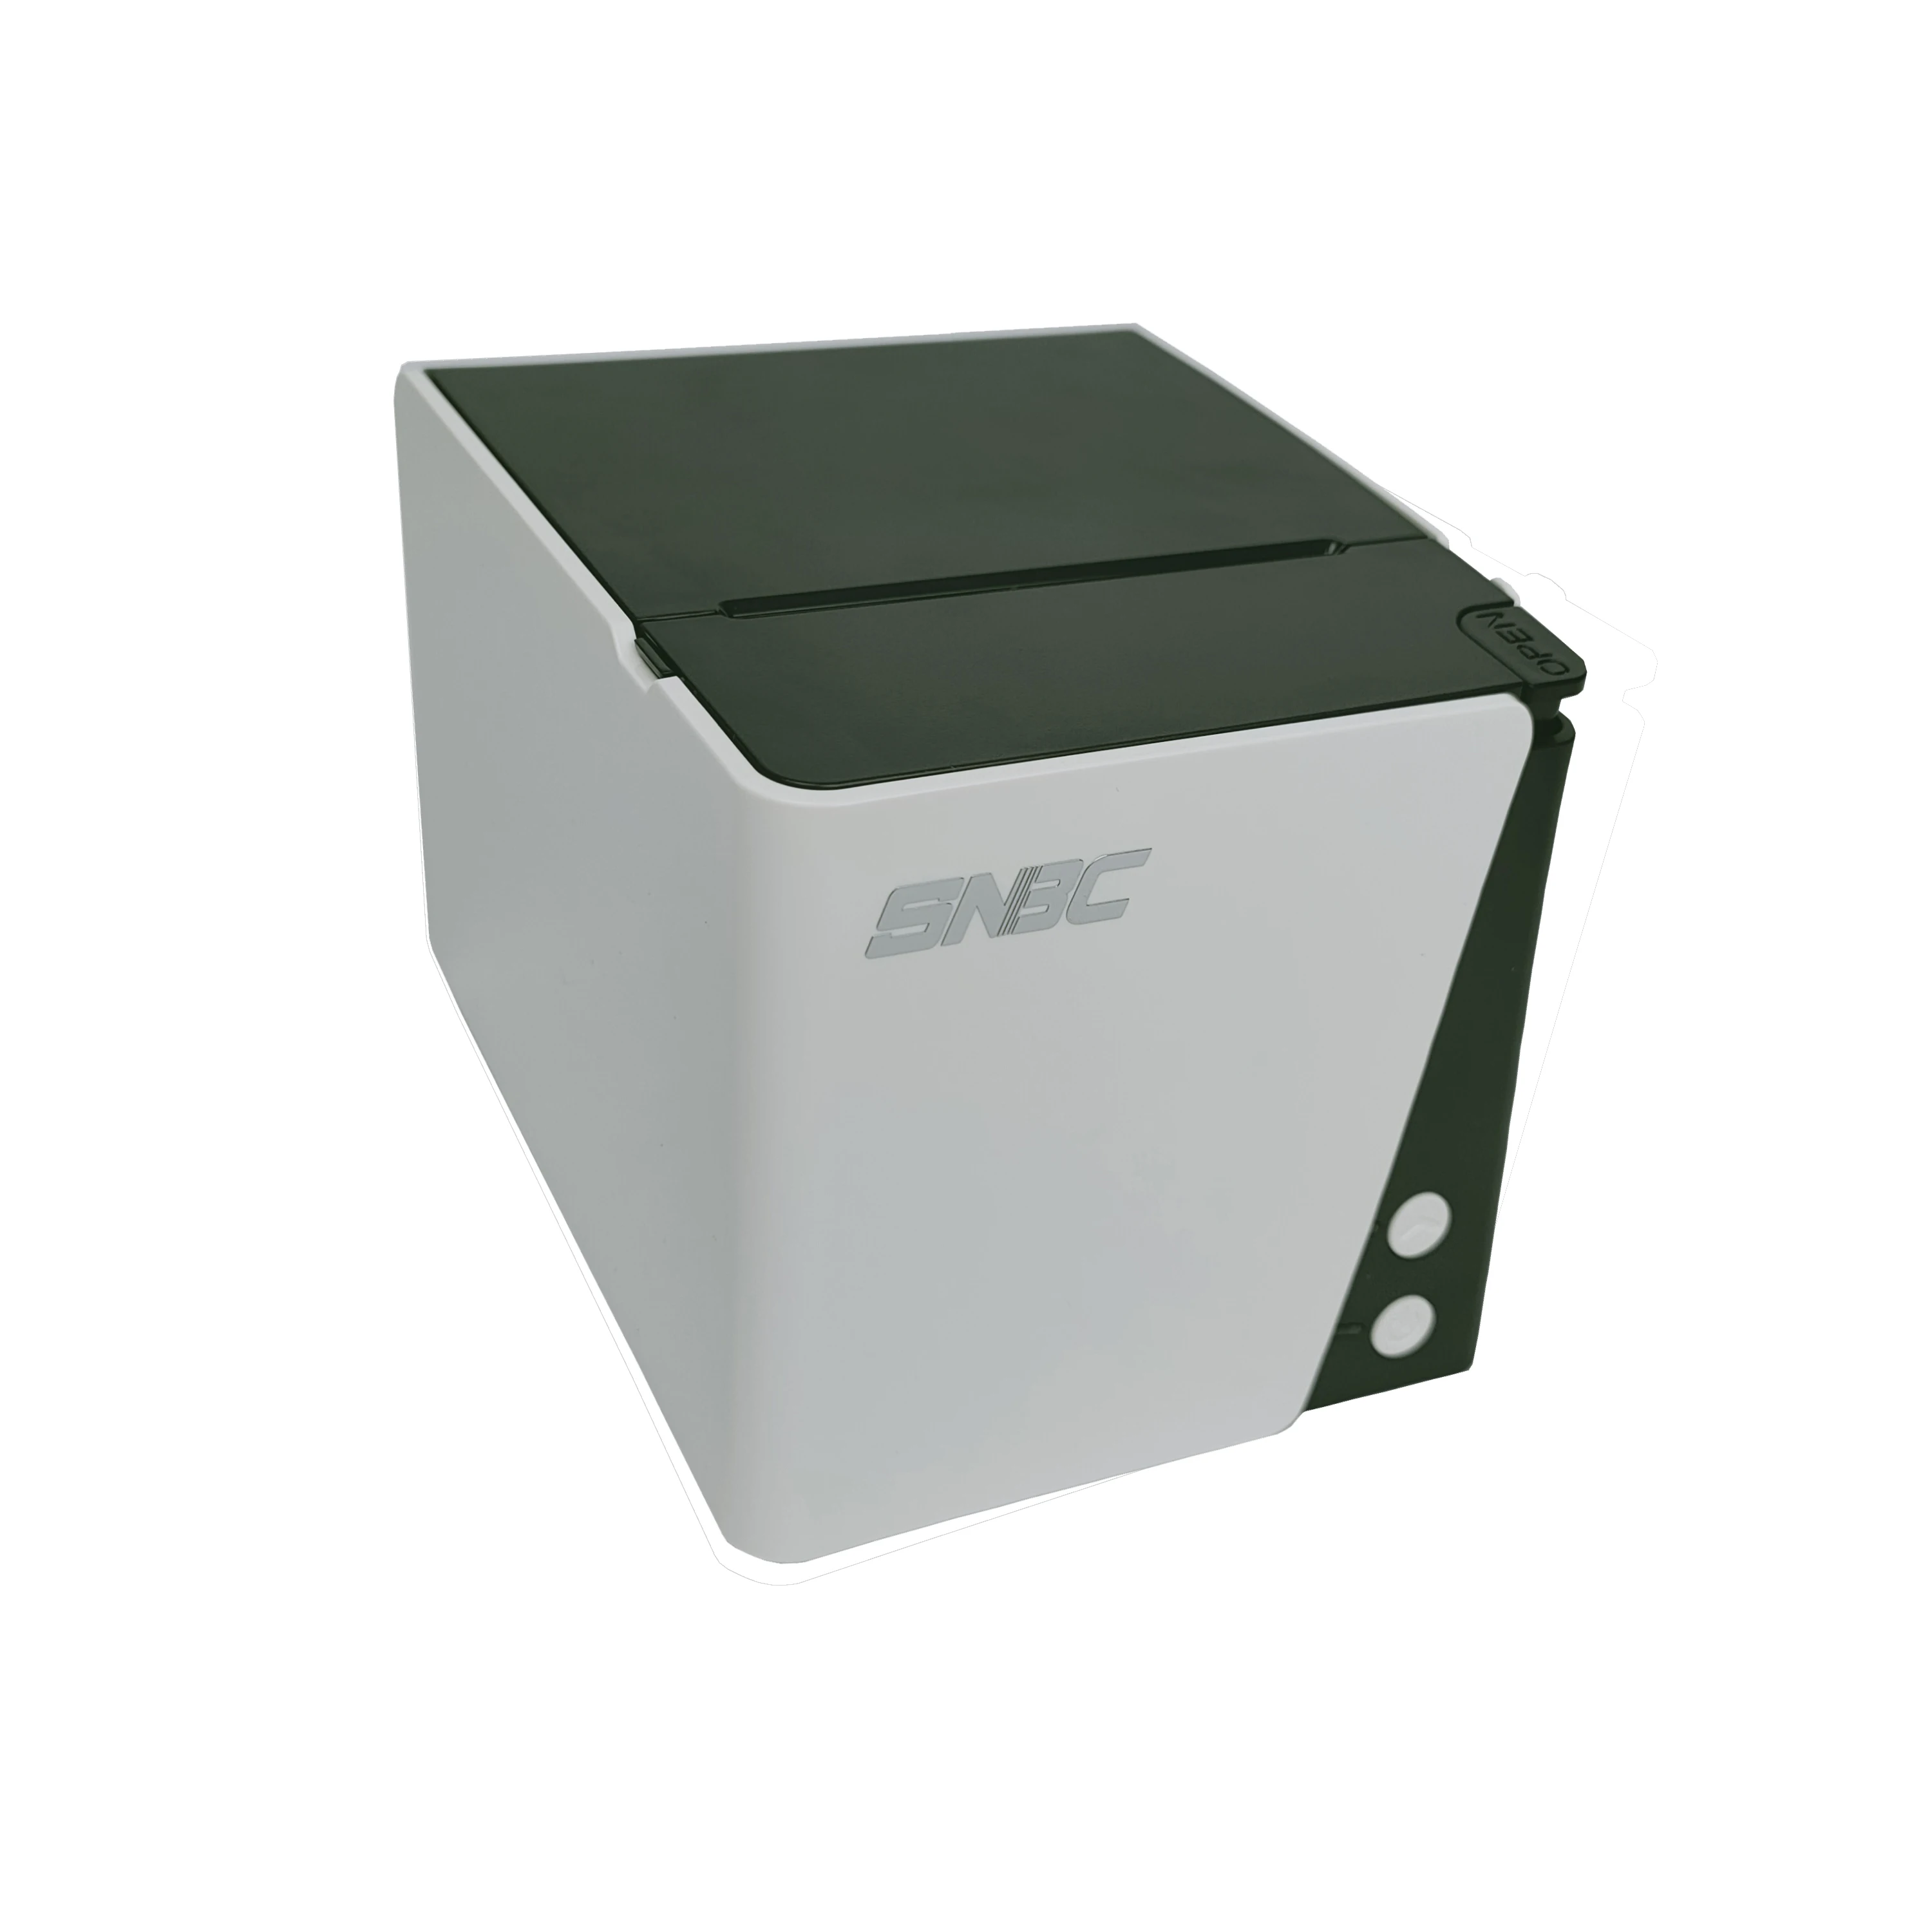 

SNBC BTP-N80 Cheap ODM/OEM 3 inch POS 80mm Serial/USB Auto Cutter Thermal Receipt Printer